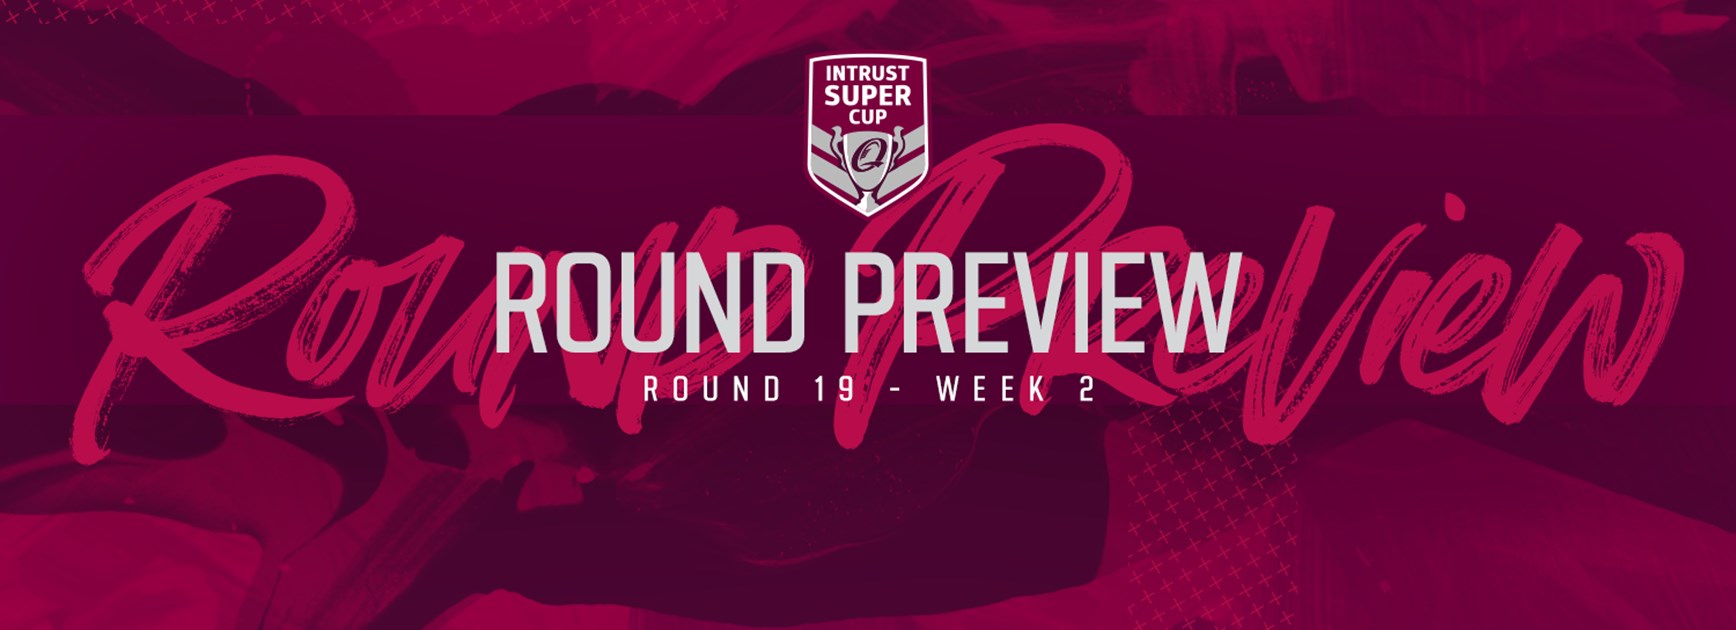 Intrust Super Cup Round 19 Week 2 preview